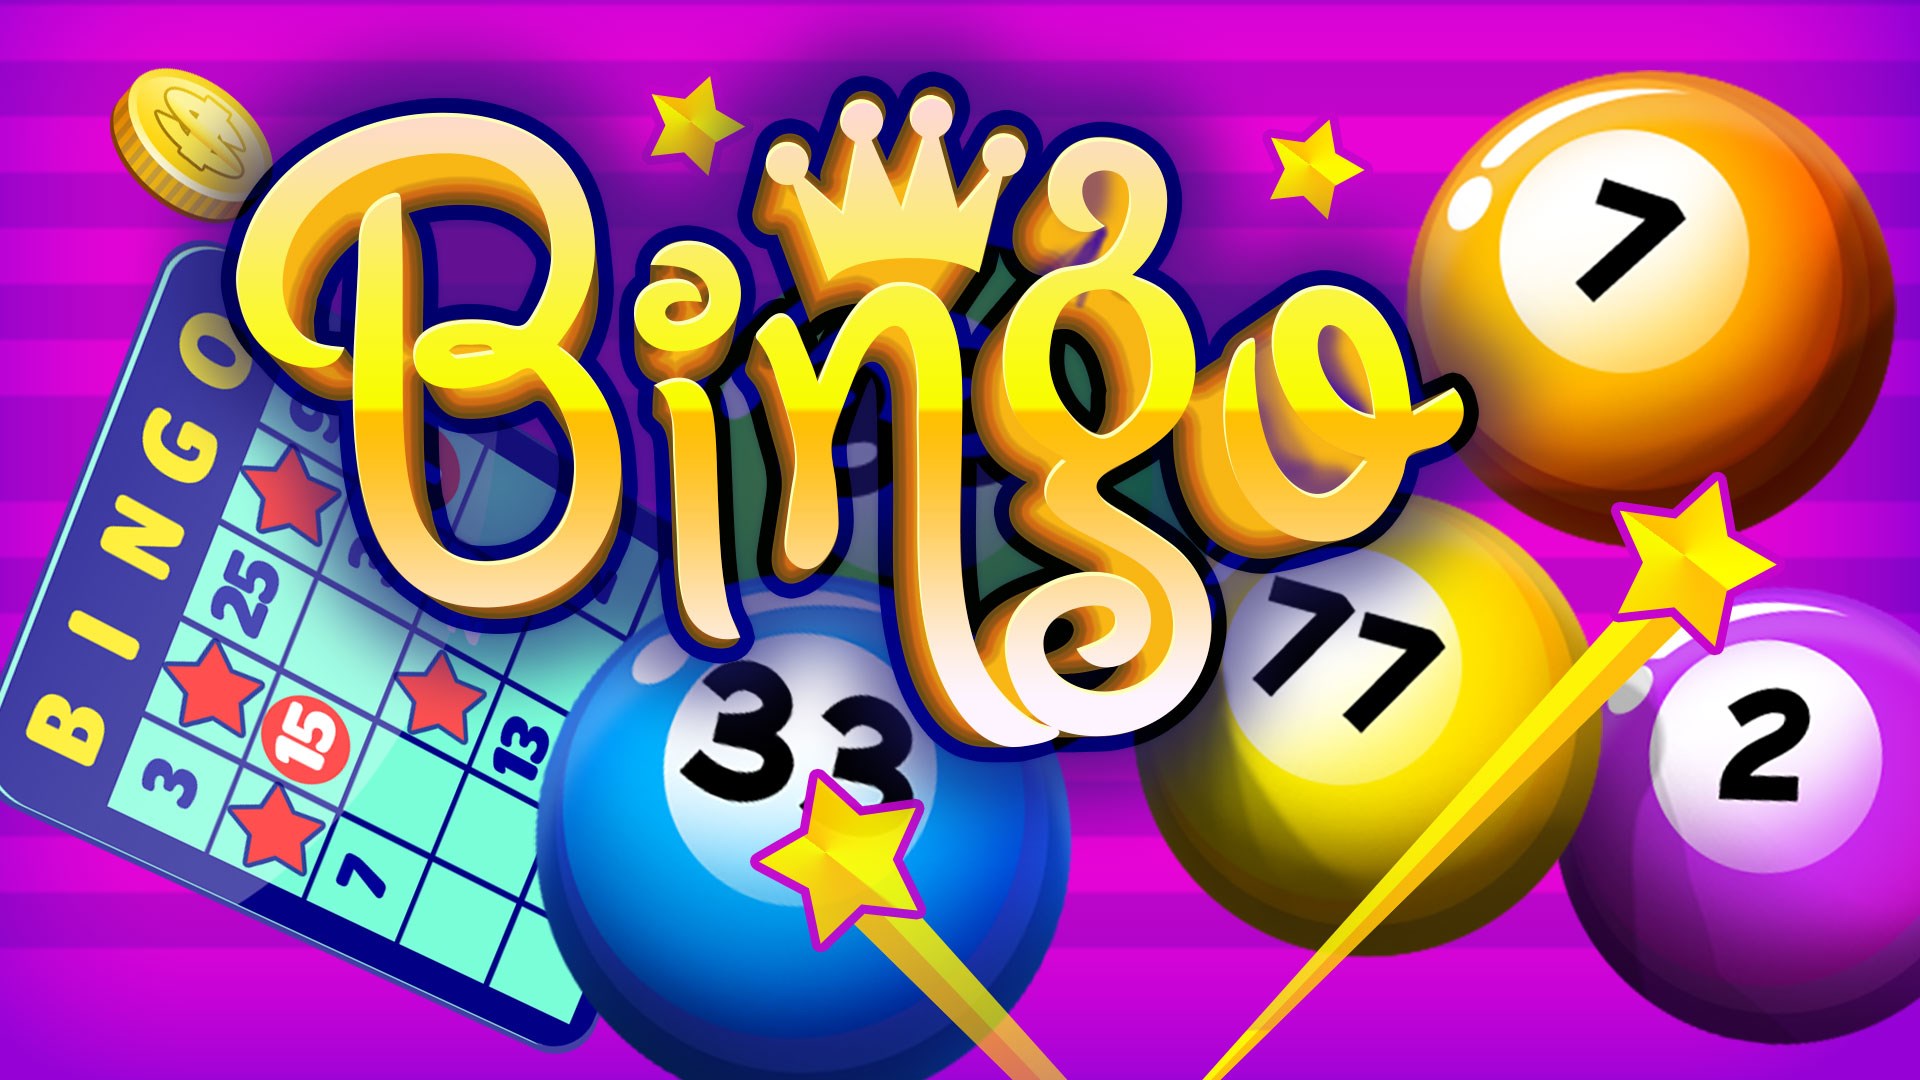 How to Play Free Bingo Slots